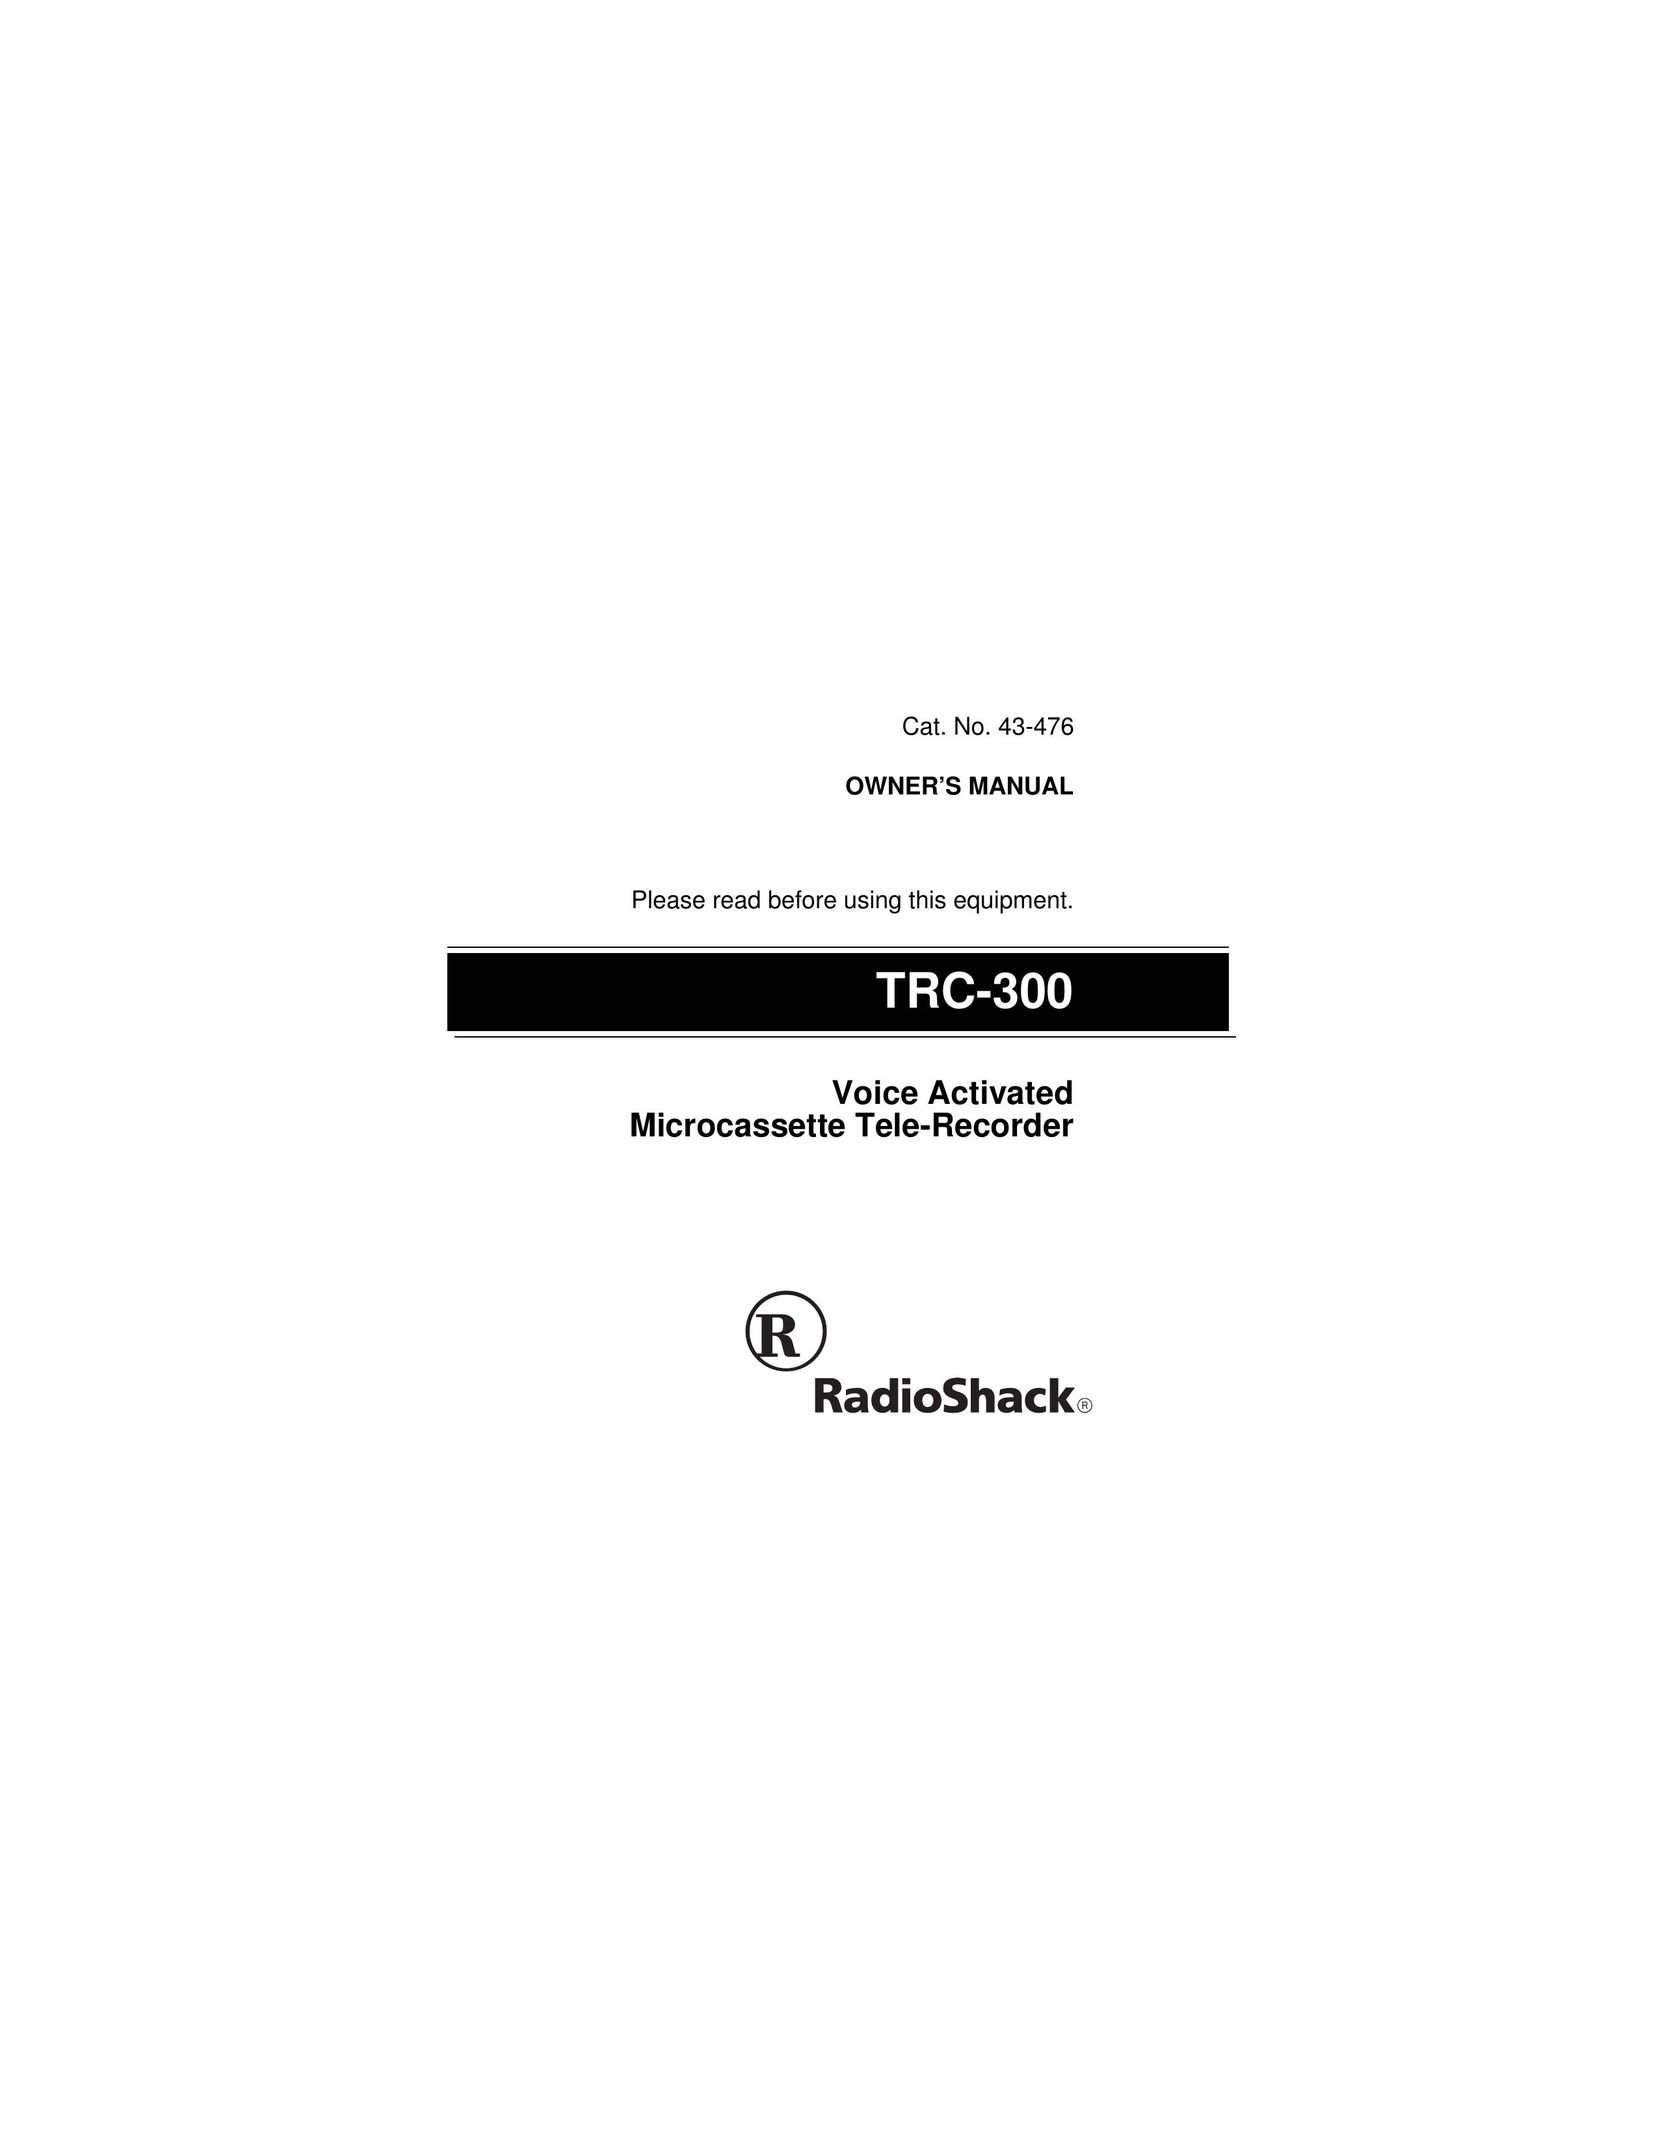 Radio Shack 43-476 Microcassette Recorder User Manual